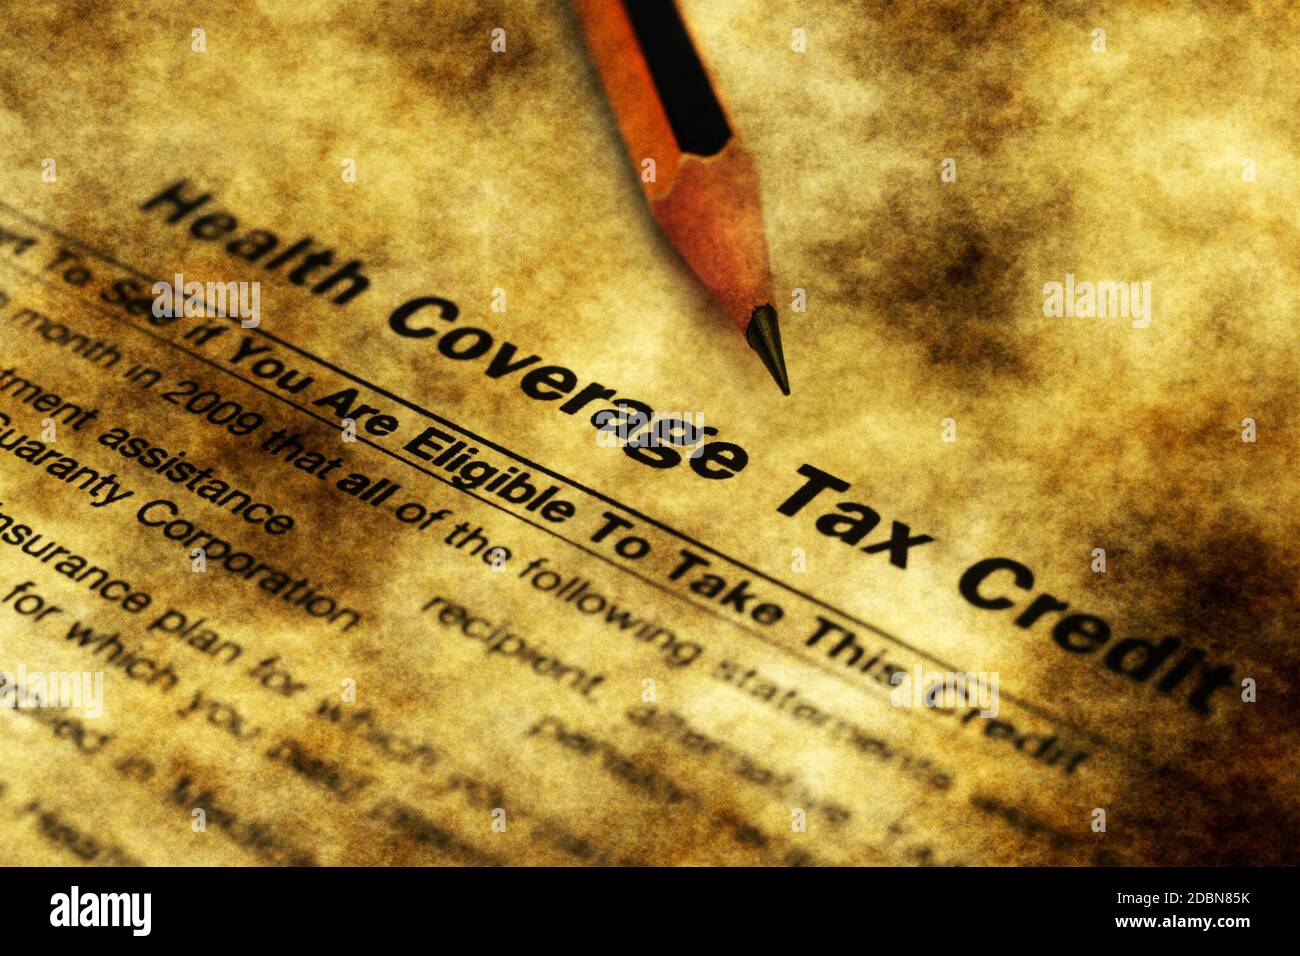 Health Tax Credit Form Grunge Concept Stock Photo Alamy